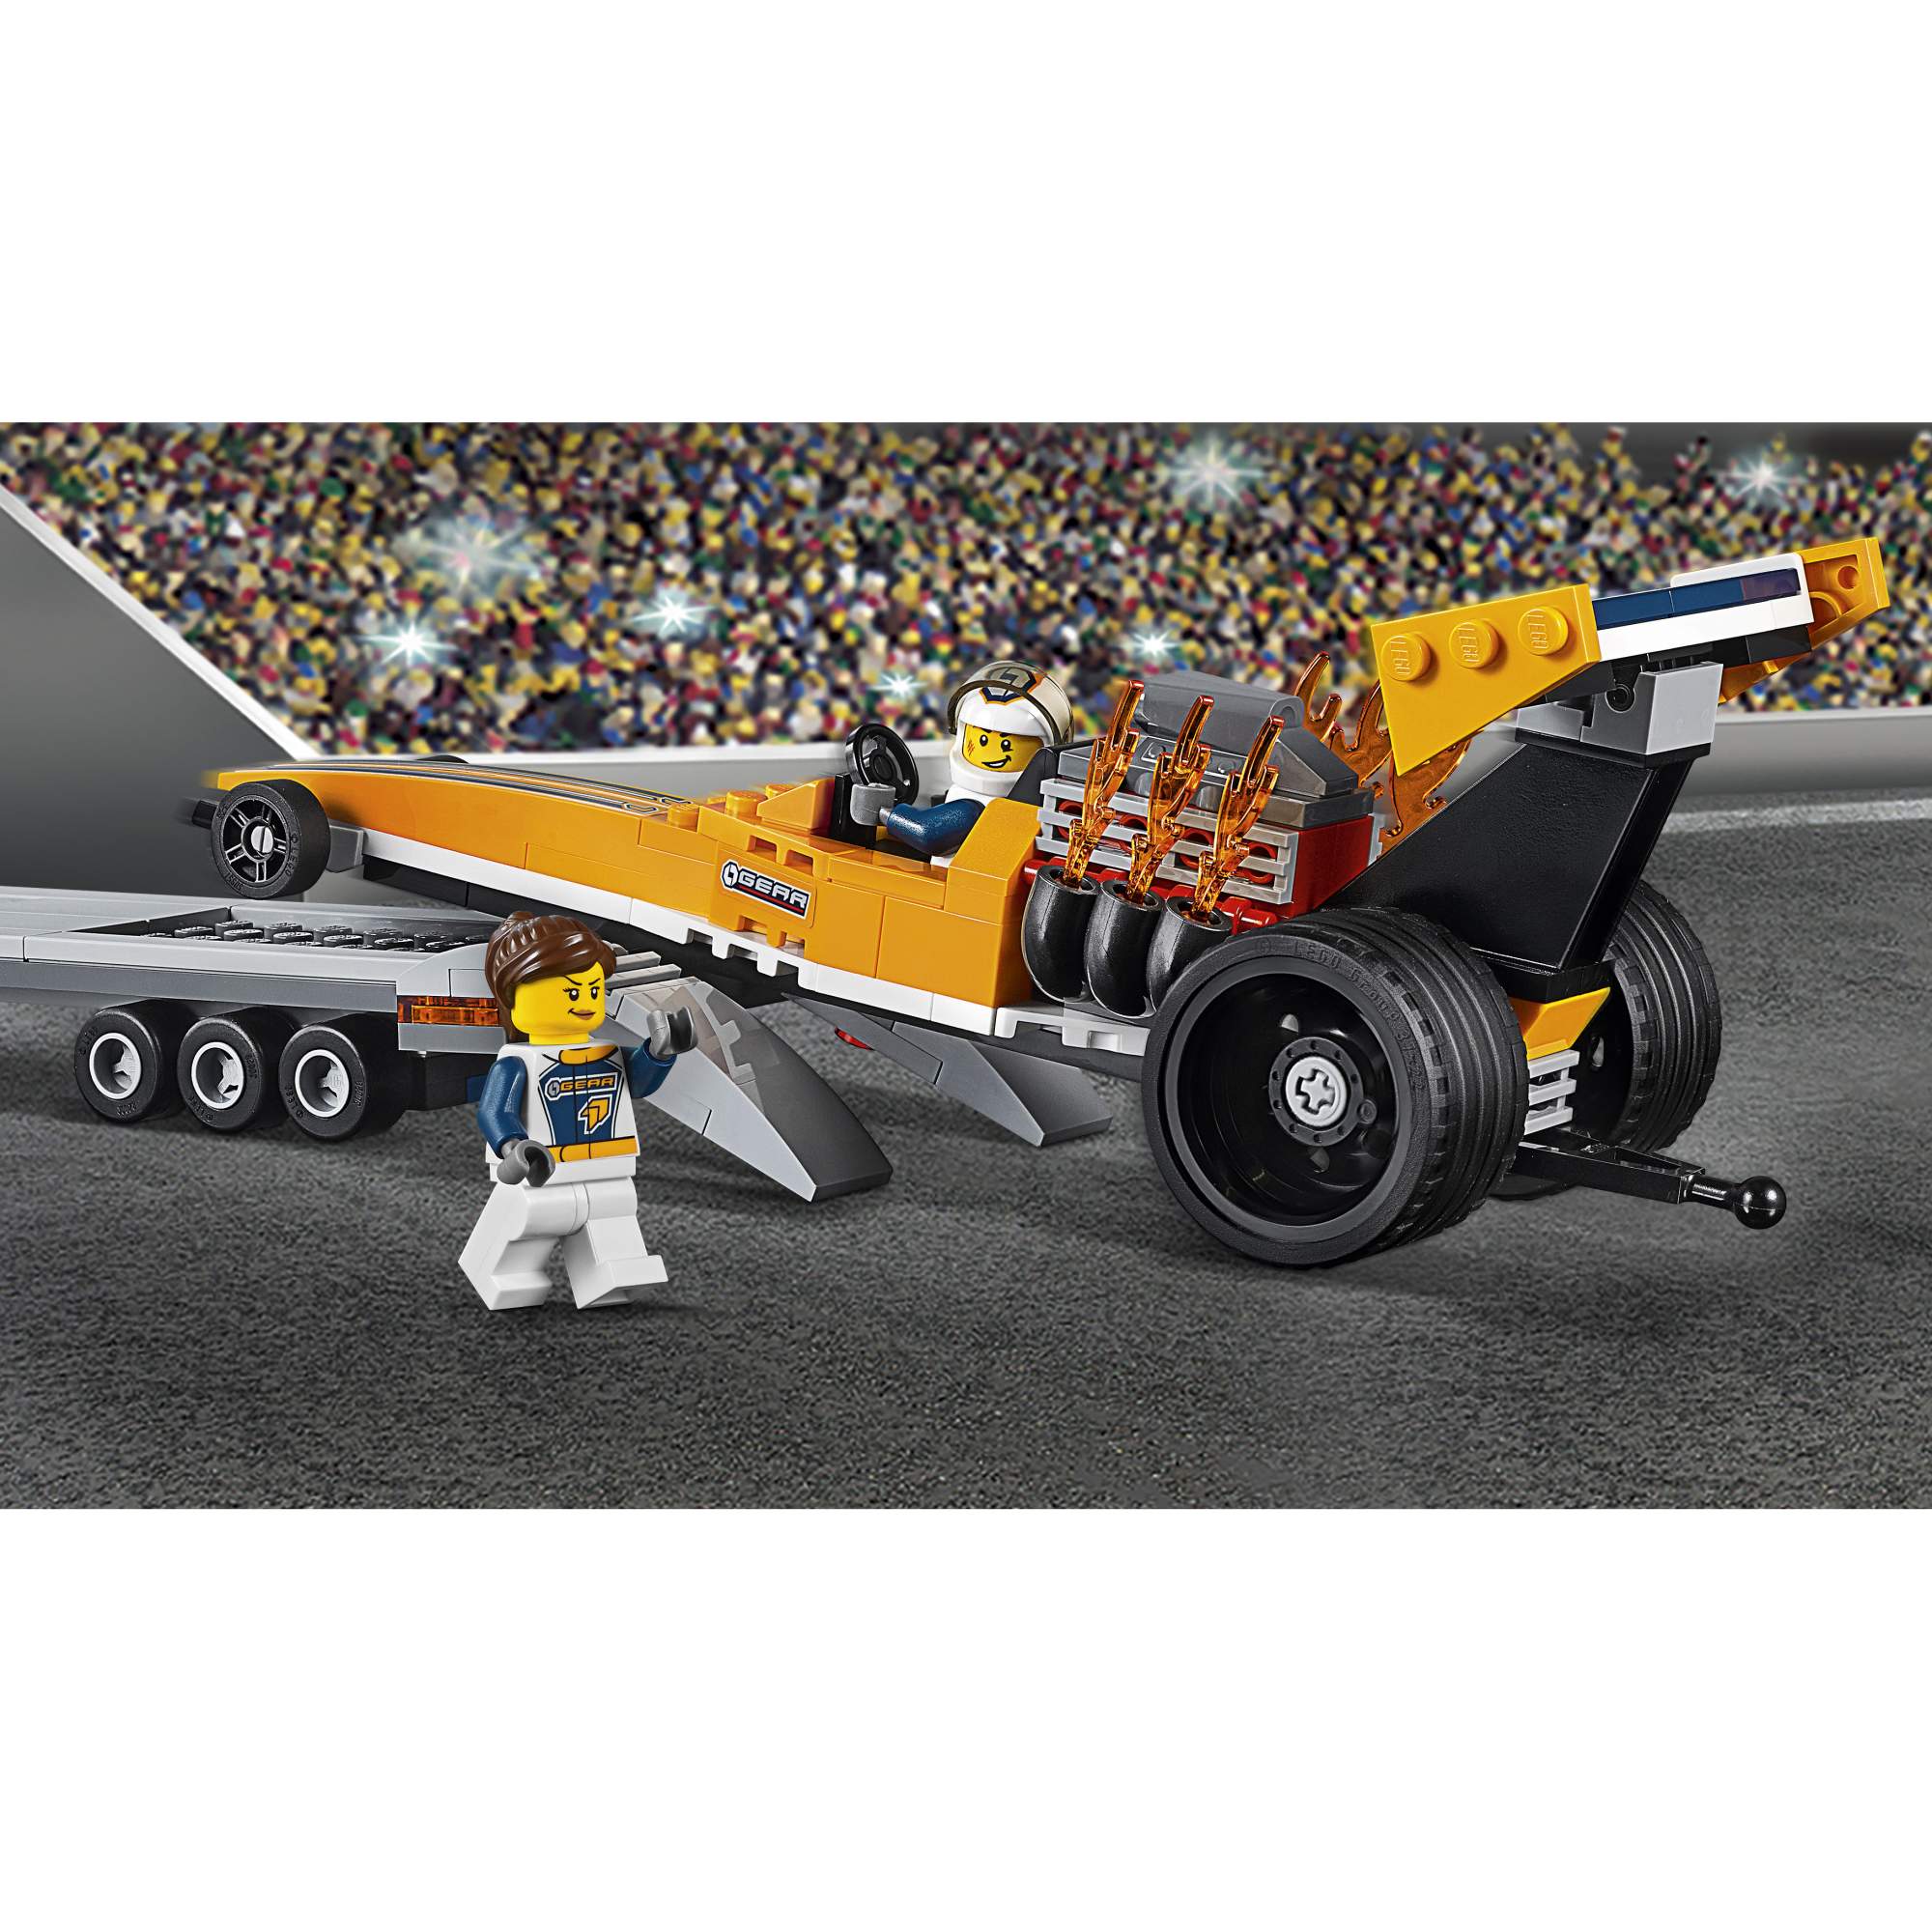 Конструктор LEGO City Great Vehicles Грузовик для перевозки драгстера (60151)